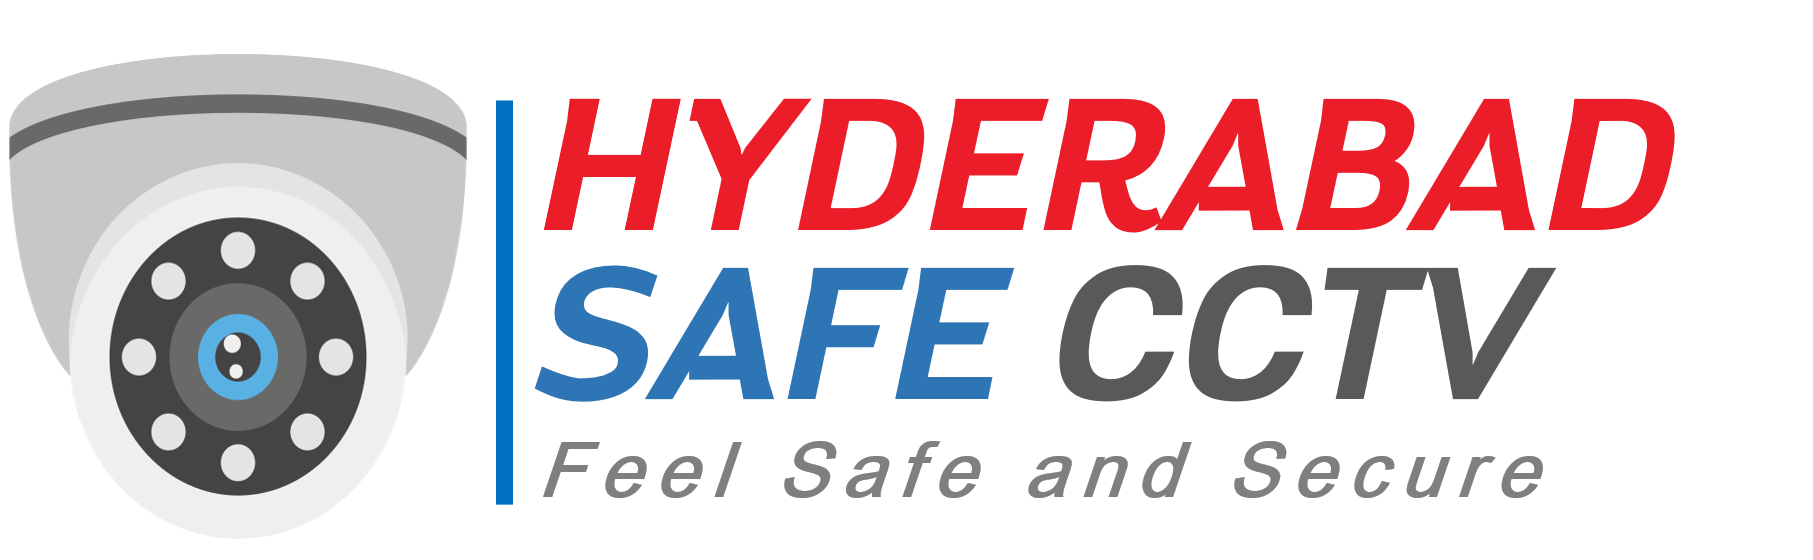 Hyderabad Safe CCTV logo